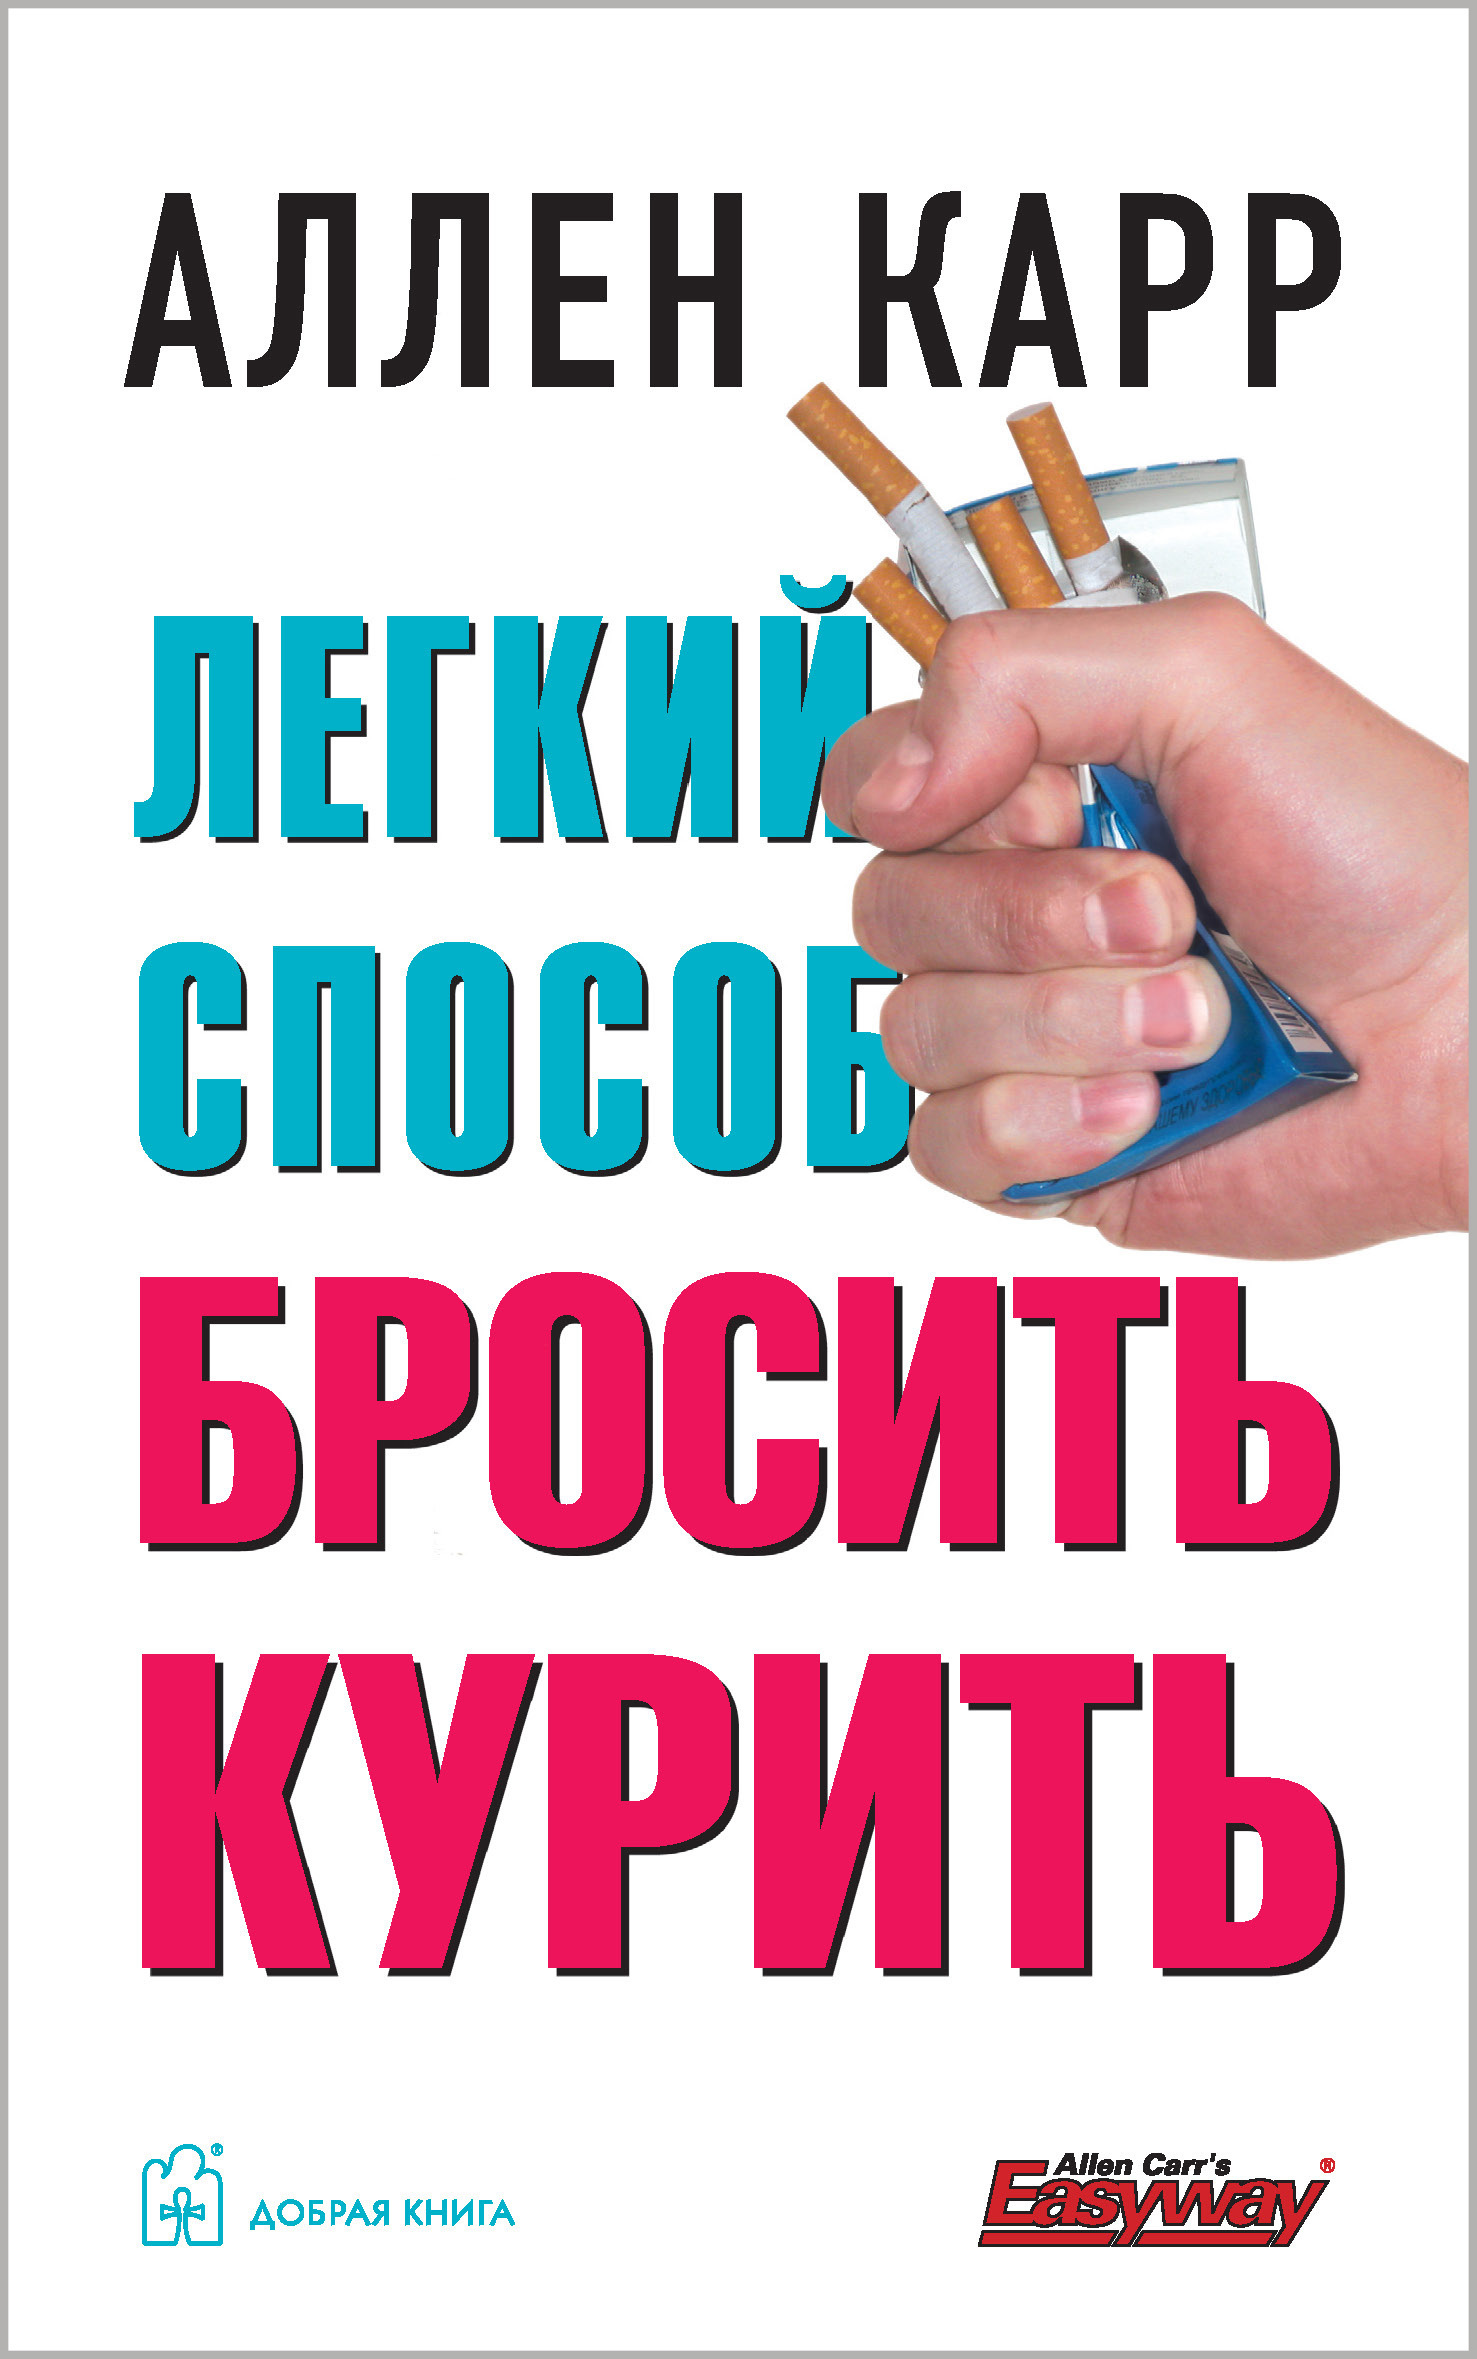 Книга алена карра. Аллен карр лёгкий способ бросить курить. Аллен кариспособ курить. Легкий способ бросить курить Аллен карр книга. Книга легко способ бросить курить.